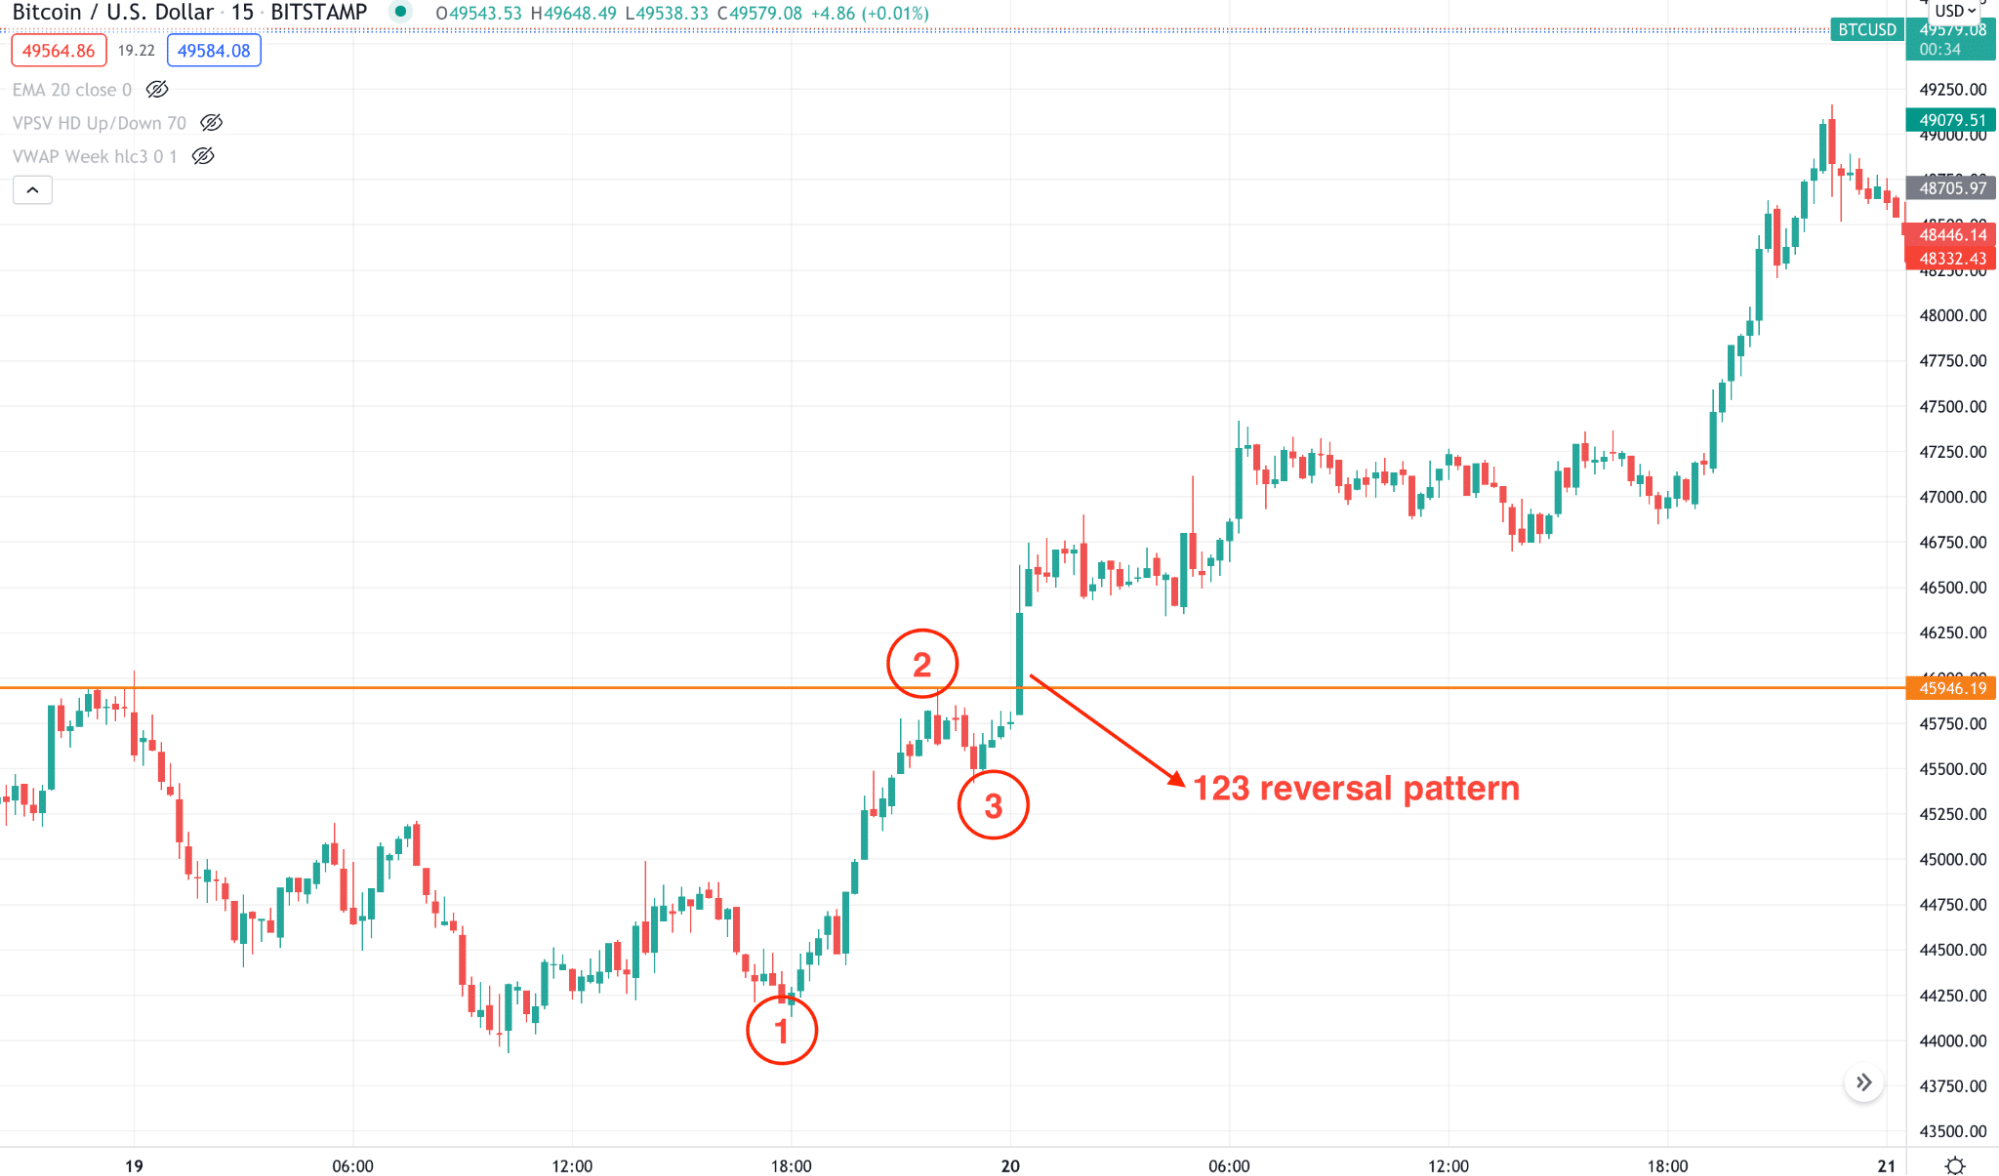 BTC/USD 123 reversal pattern